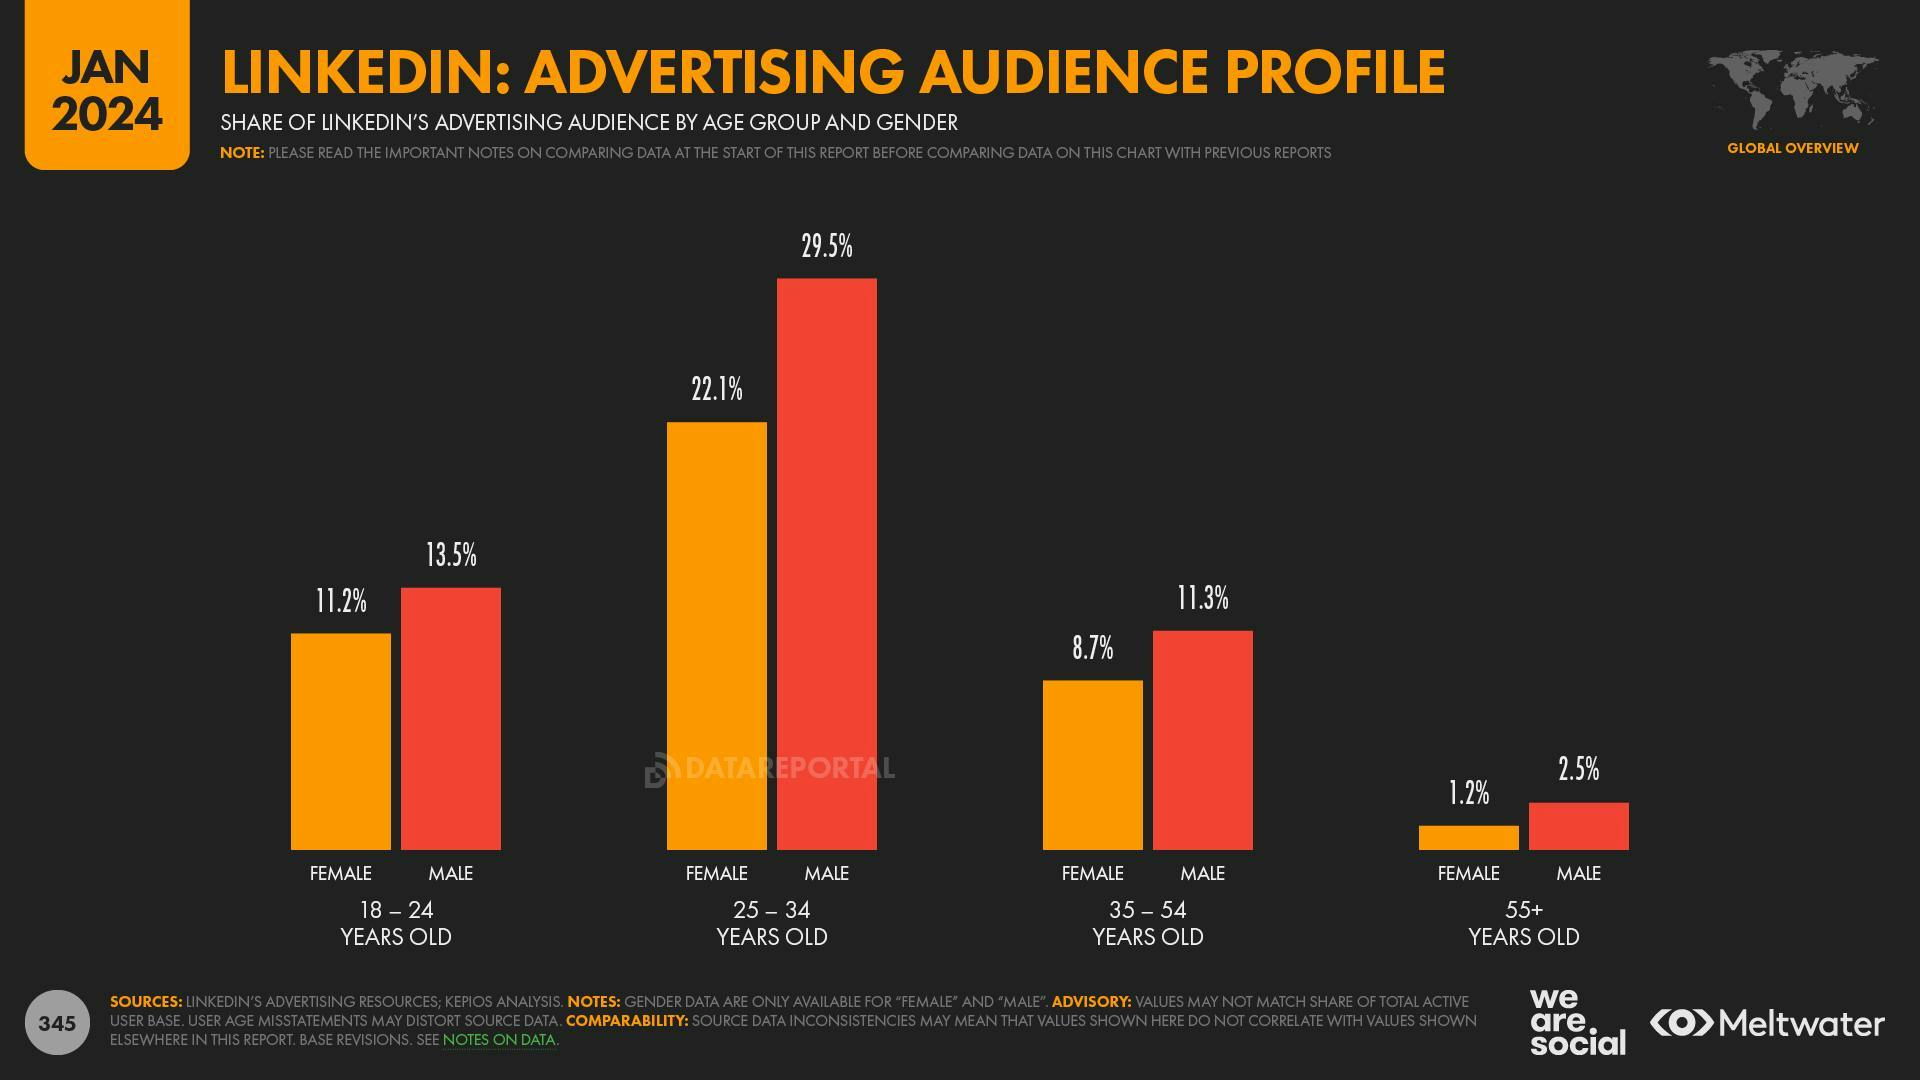 LinkedIn: Advertising audience profile